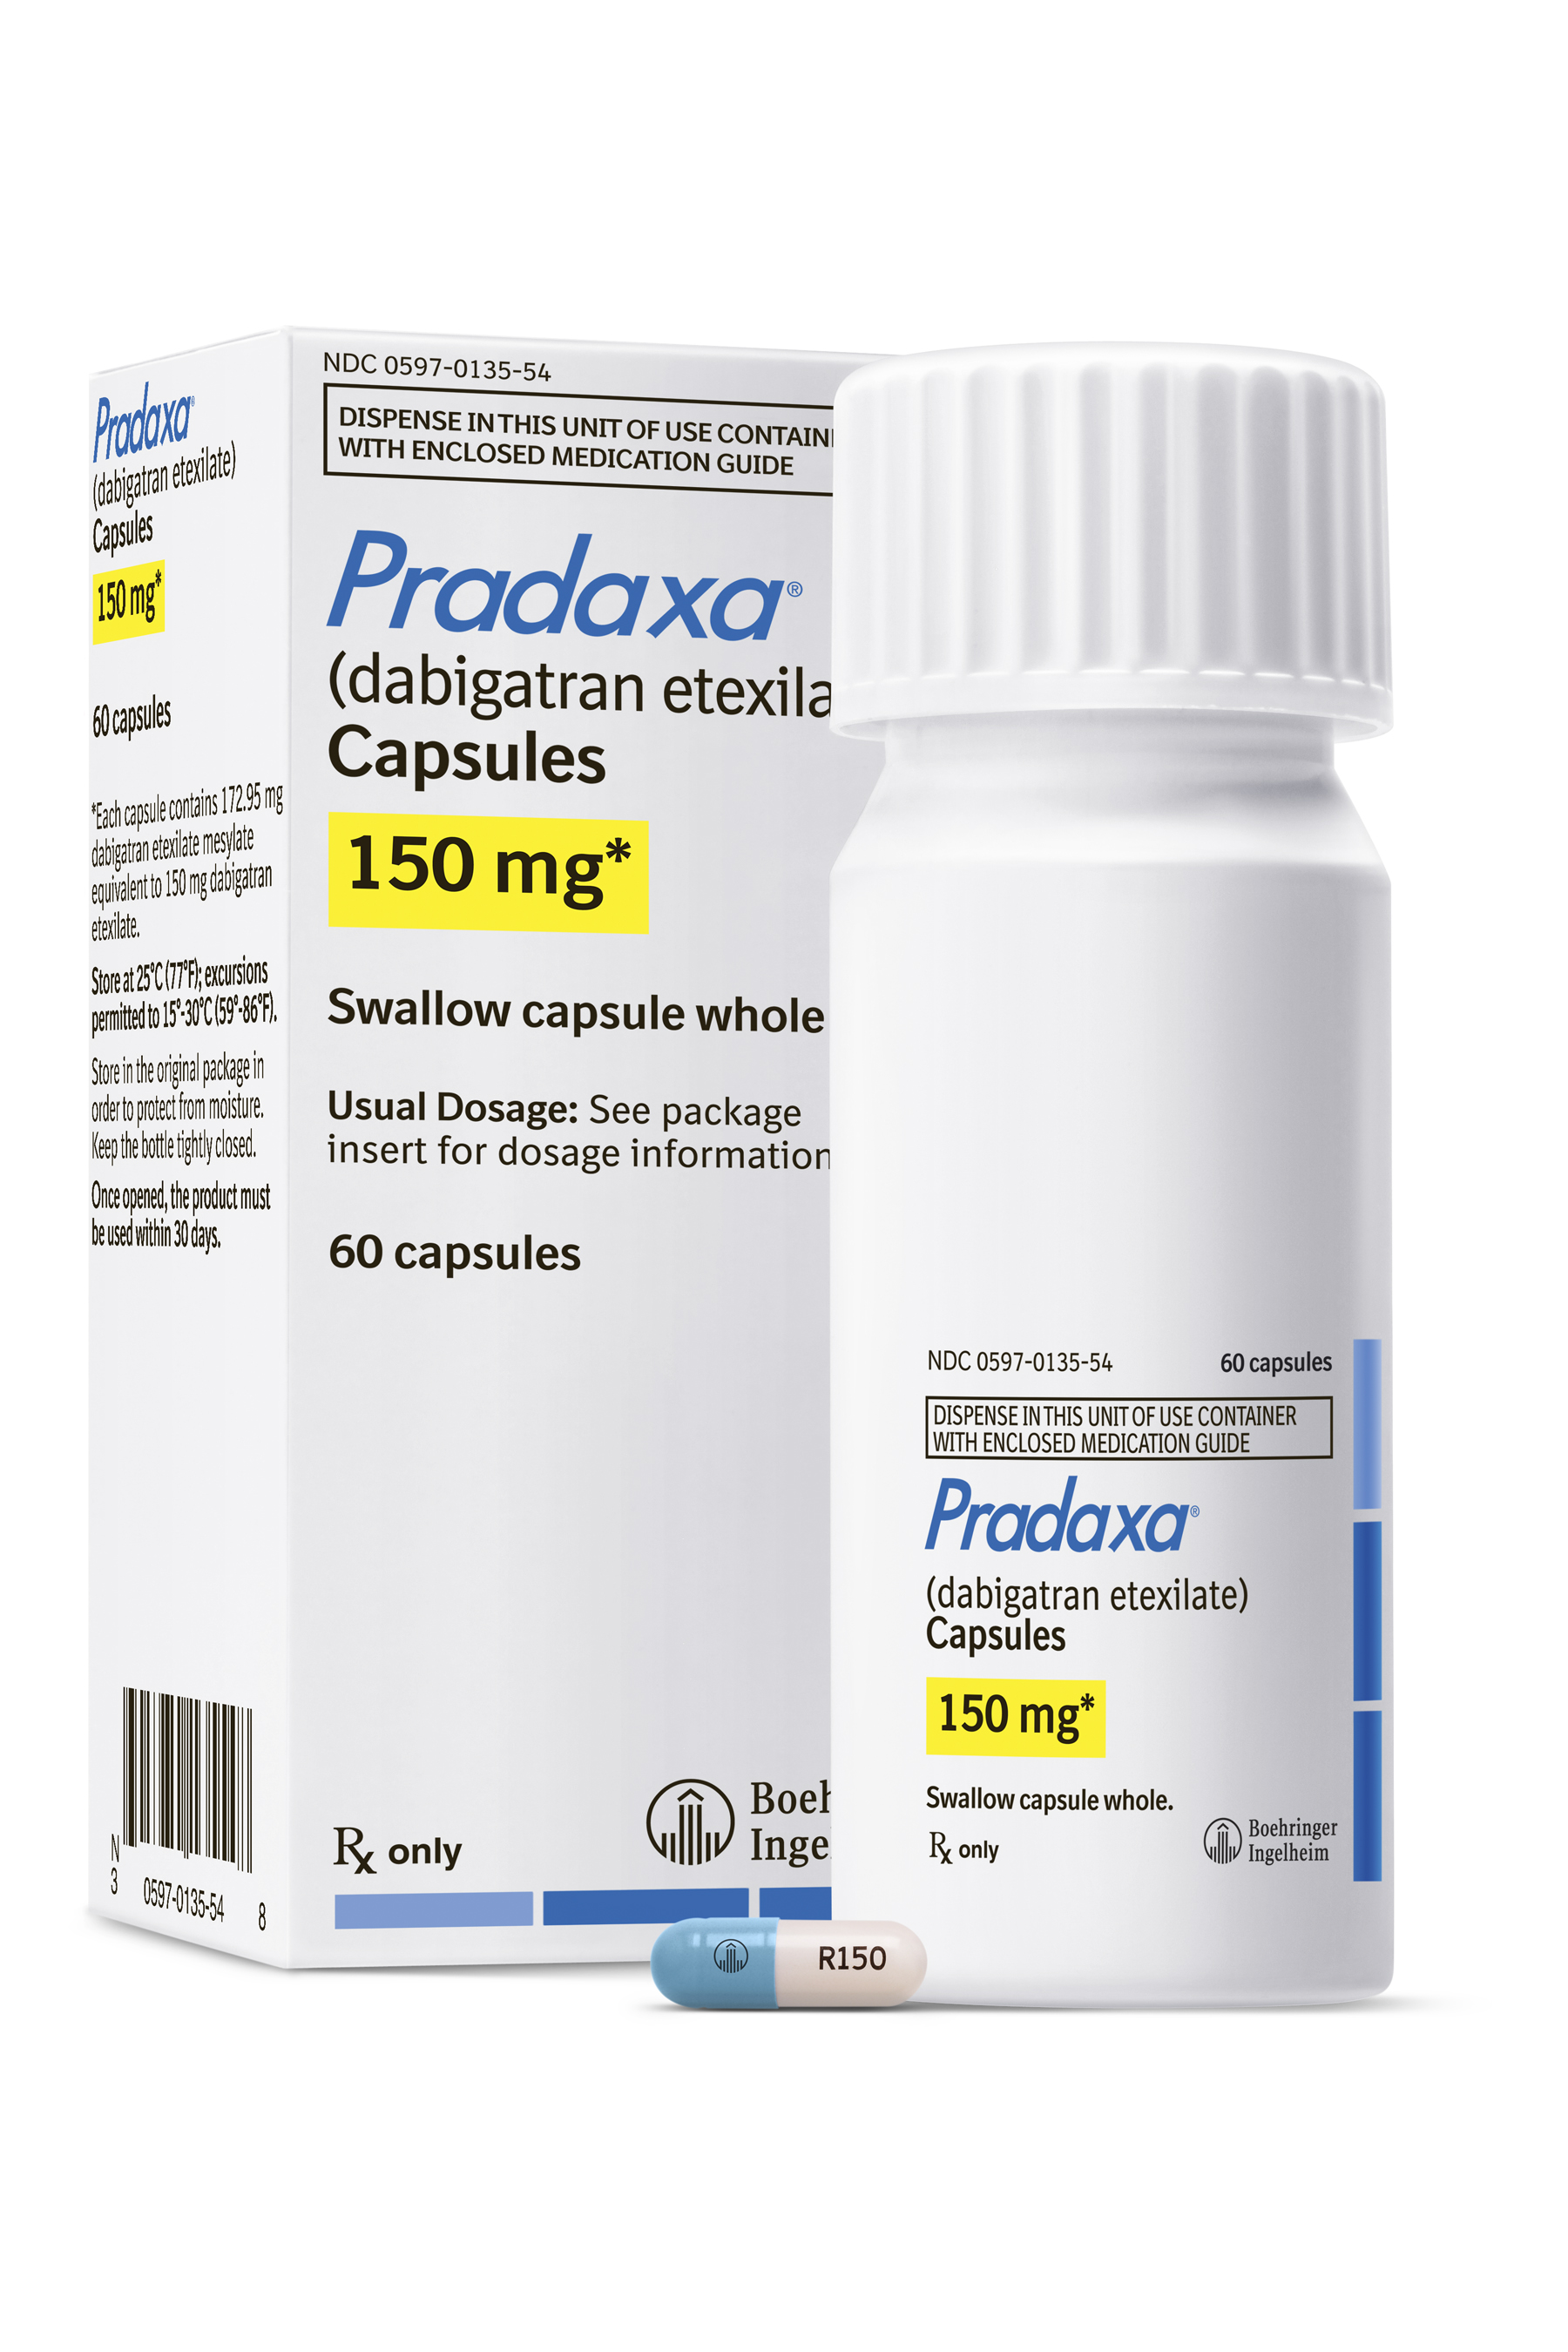 Despite Safety Concerns, Pradaxa Approved for DVT/PE